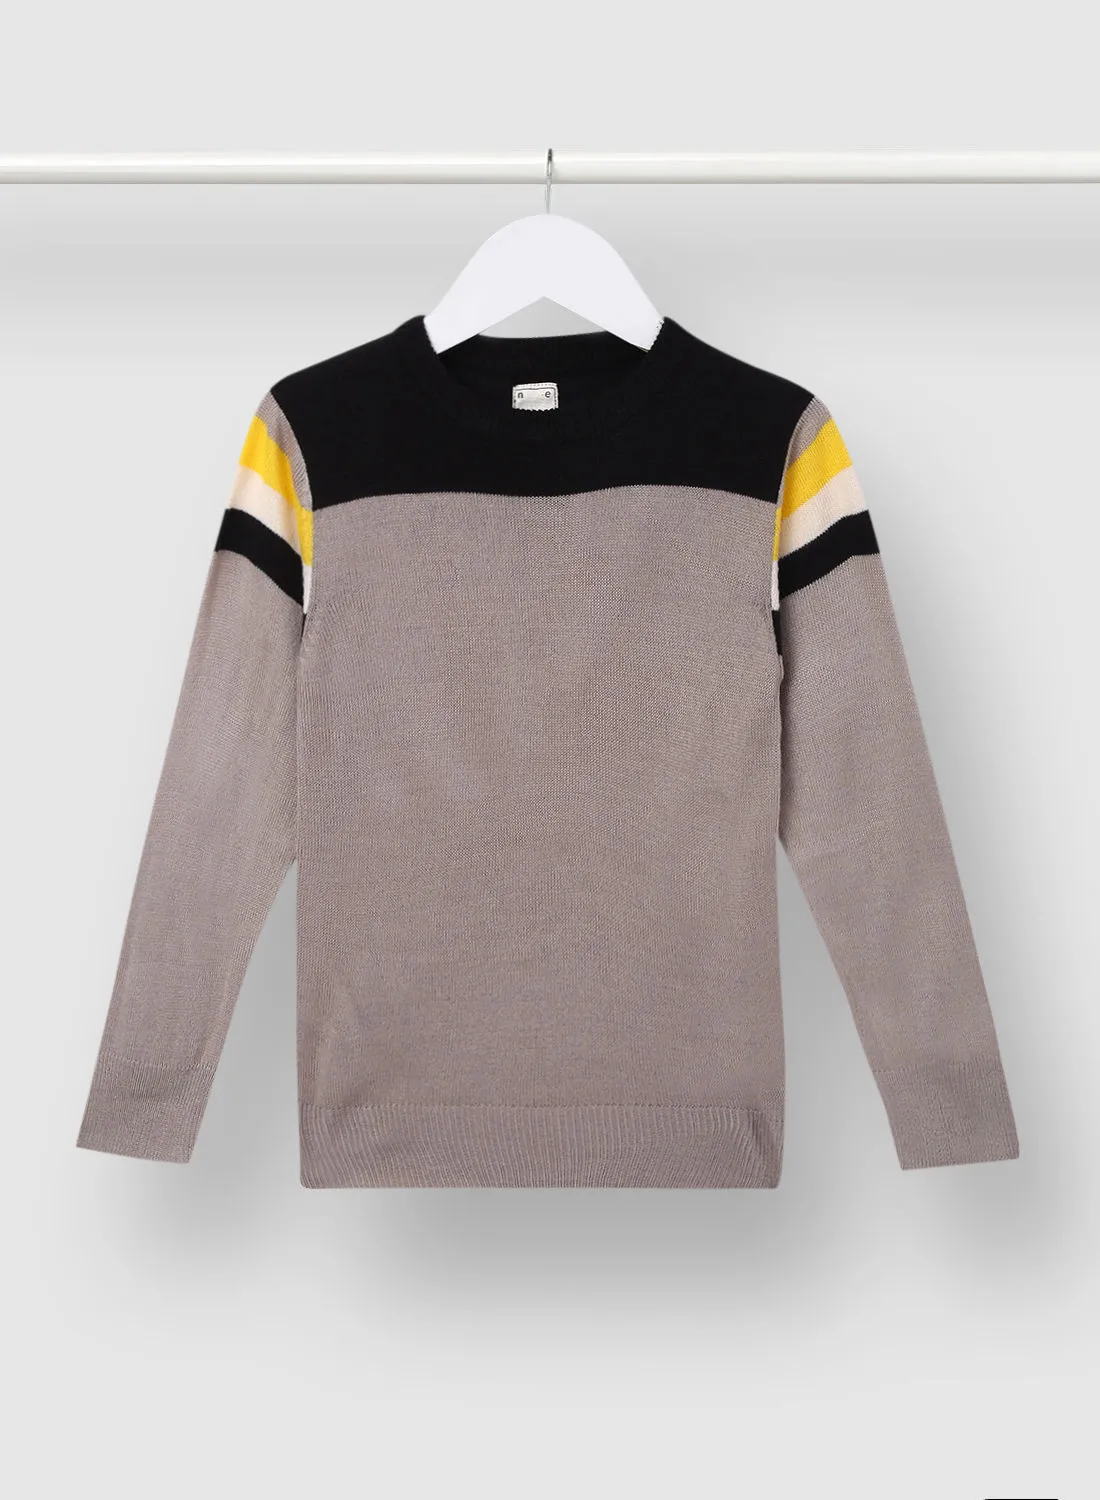 NEON Colourblock Pattern Crew Neck Sweater Grey/Black